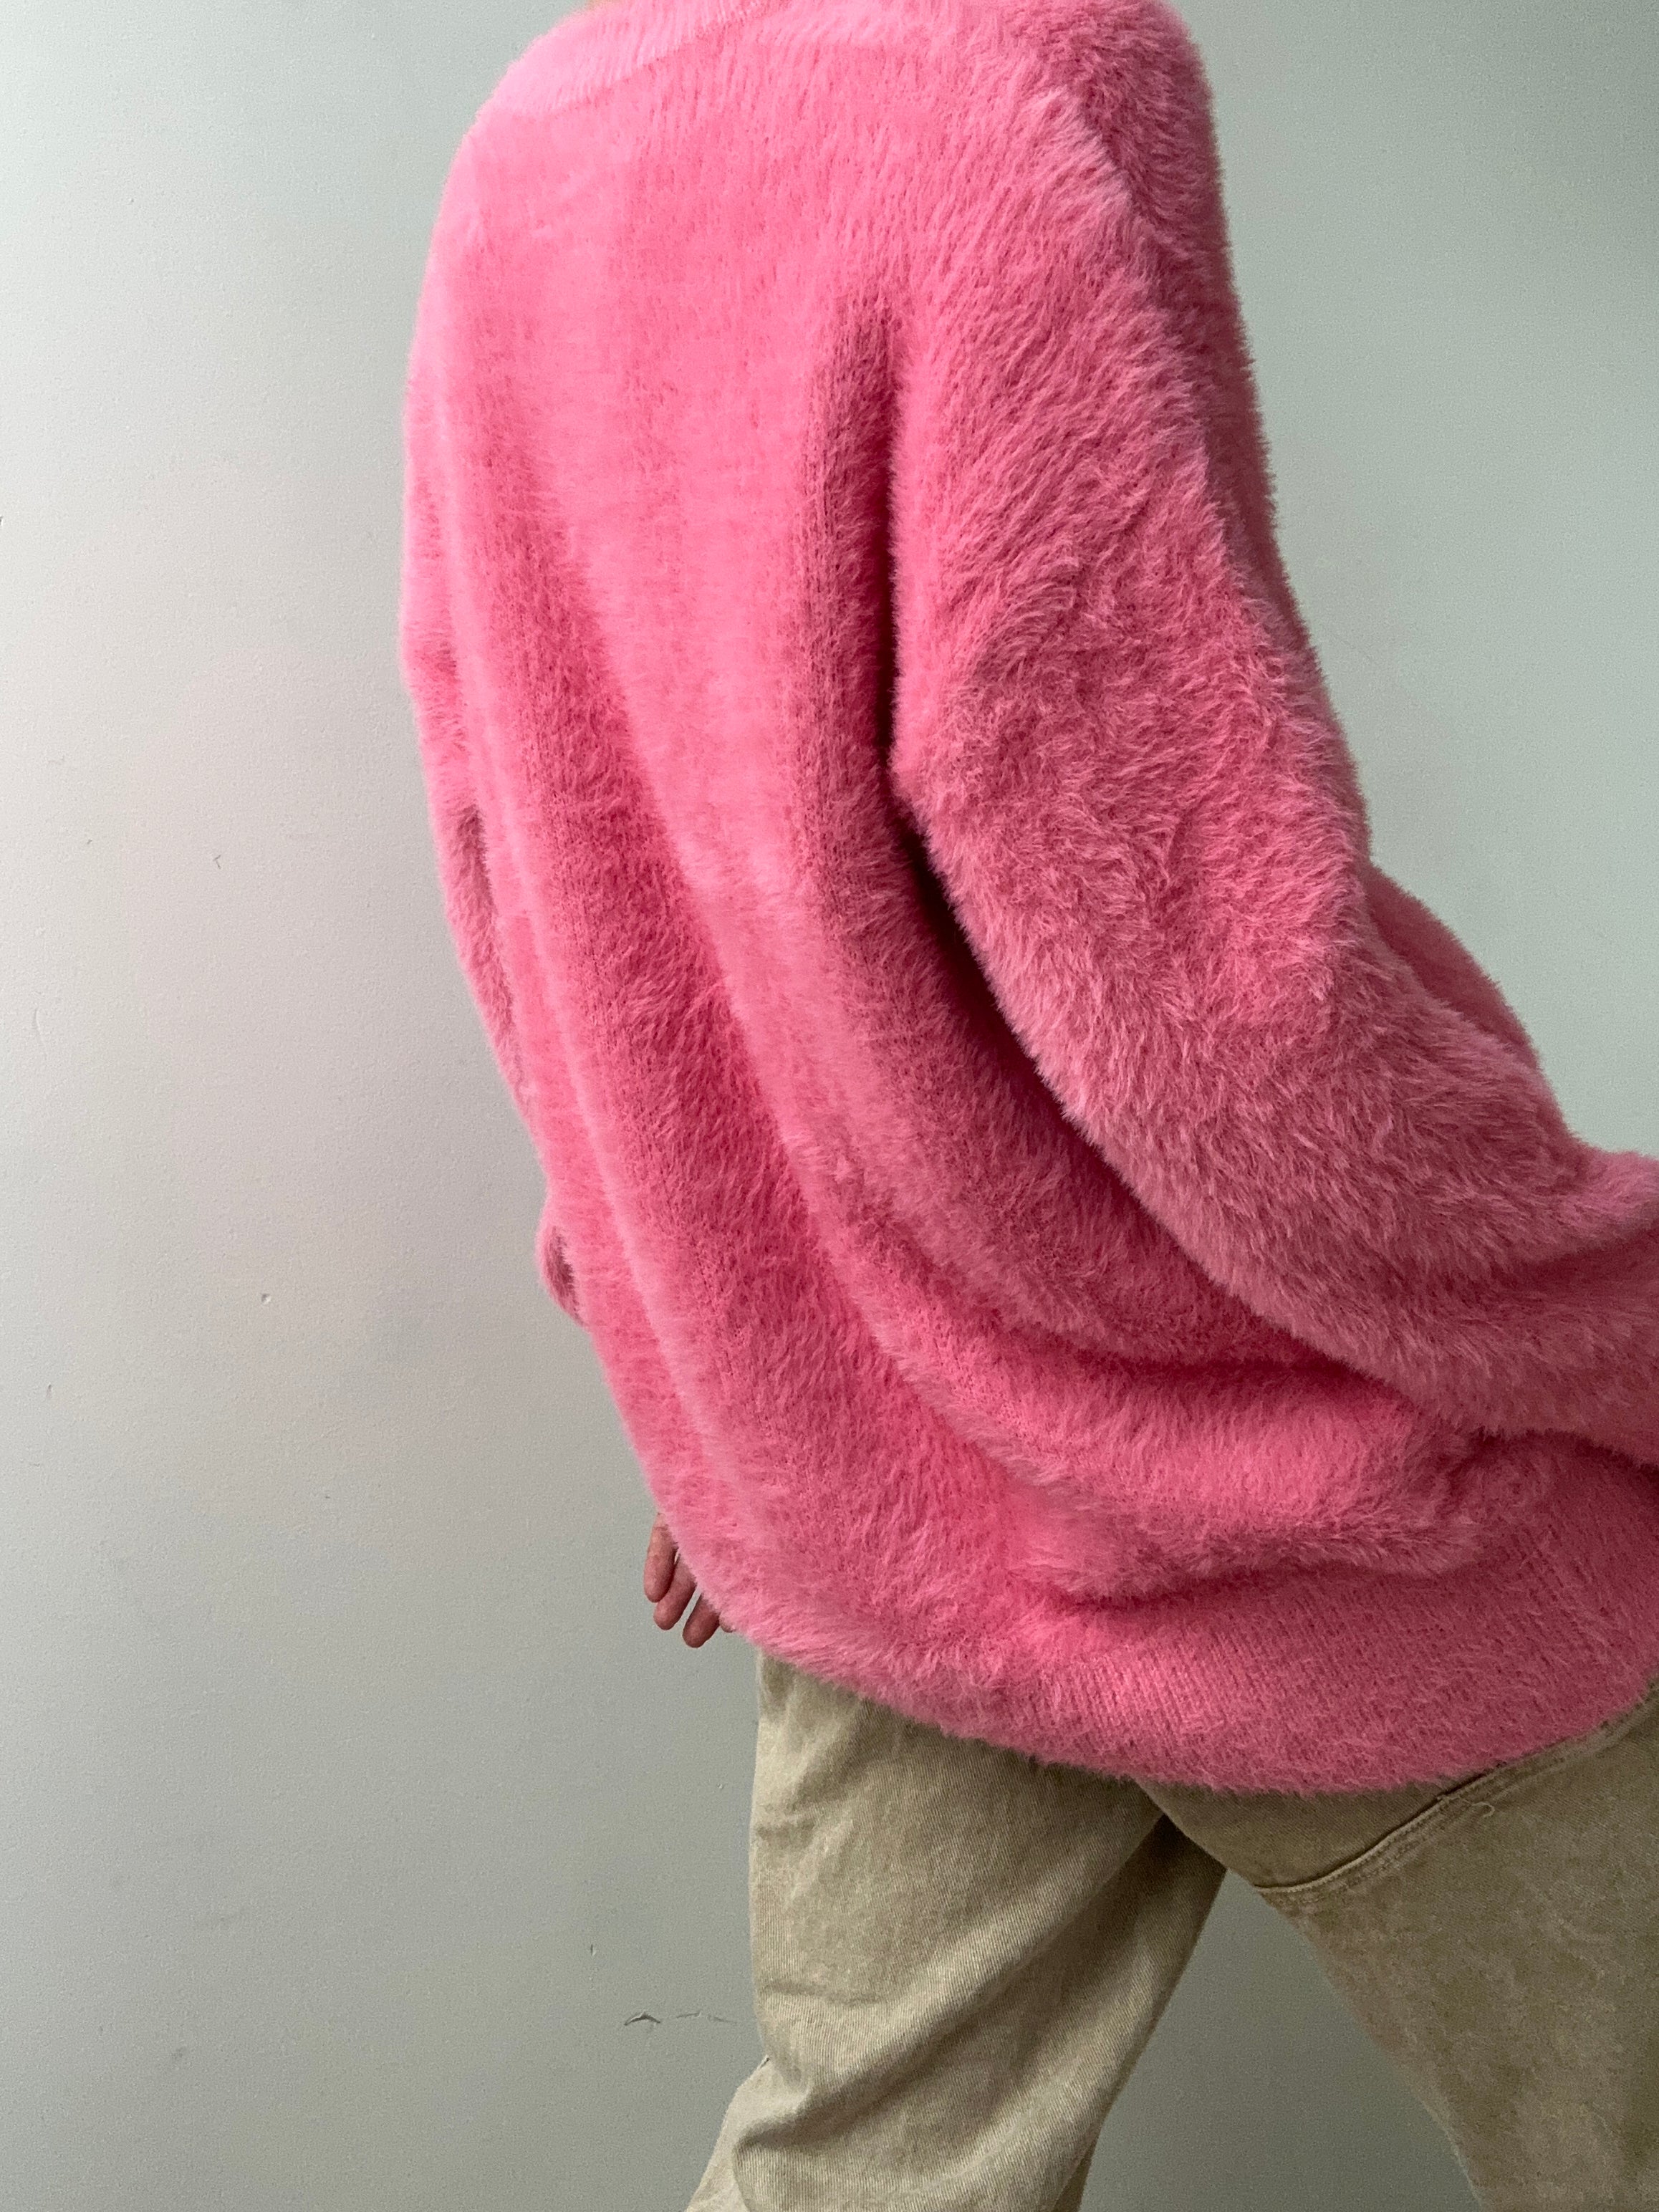 Future Nomads Jumpers Small-Medium V Neck Soft Knit Pink